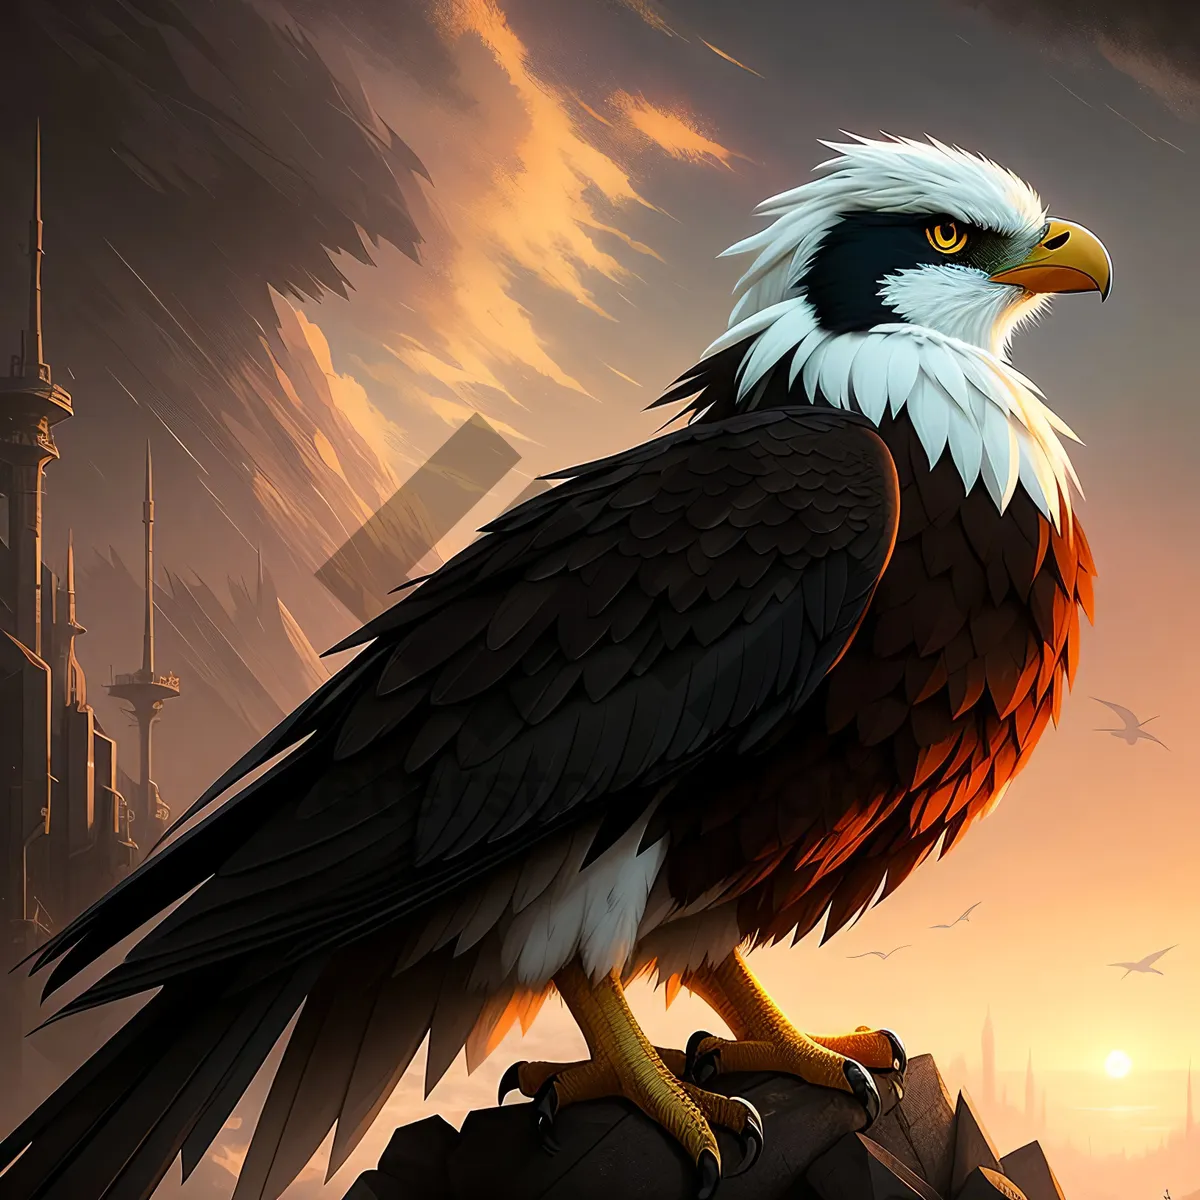 Picture of Majestic Predator in Flight: Hawk-Eagle Soaring with Piercing Gaze